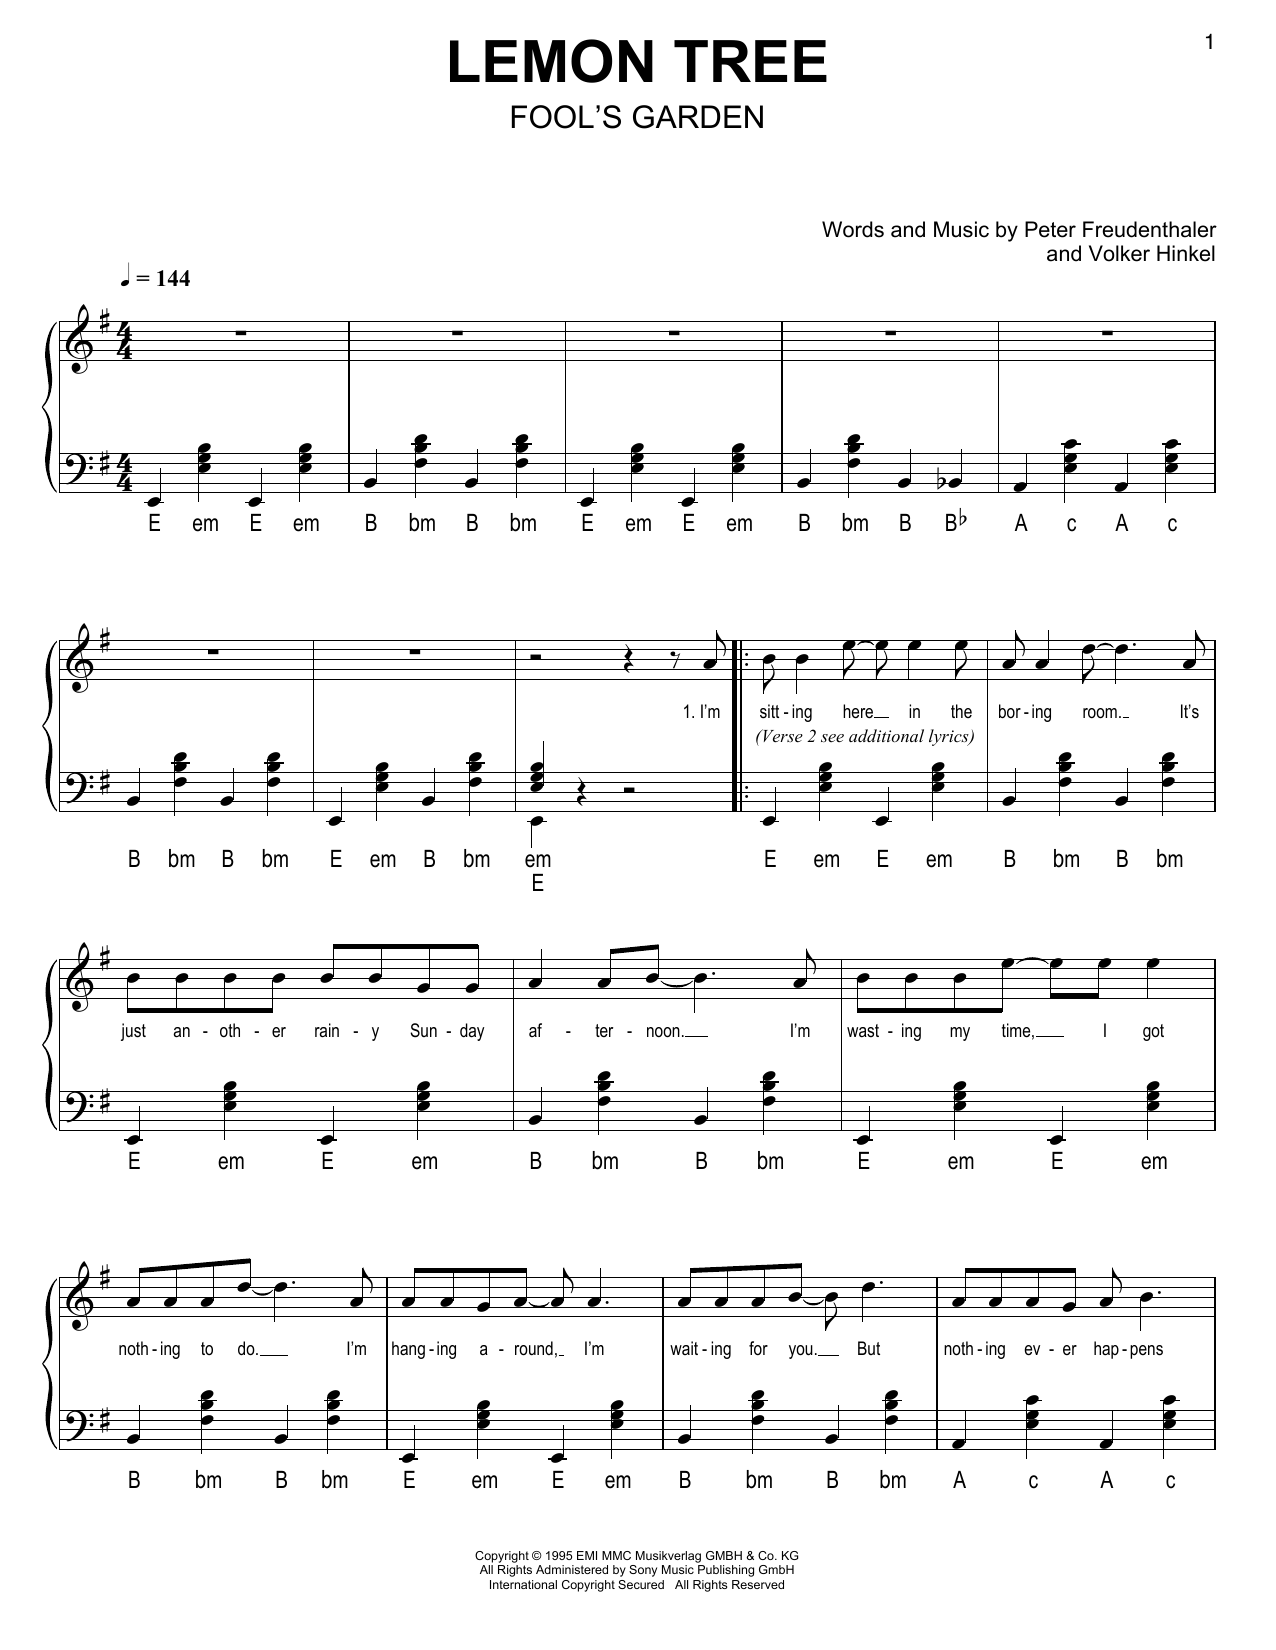 Fool's Garden Lemon Tree Sheet Music Notes & Chords for Accordion - Download or Print PDF